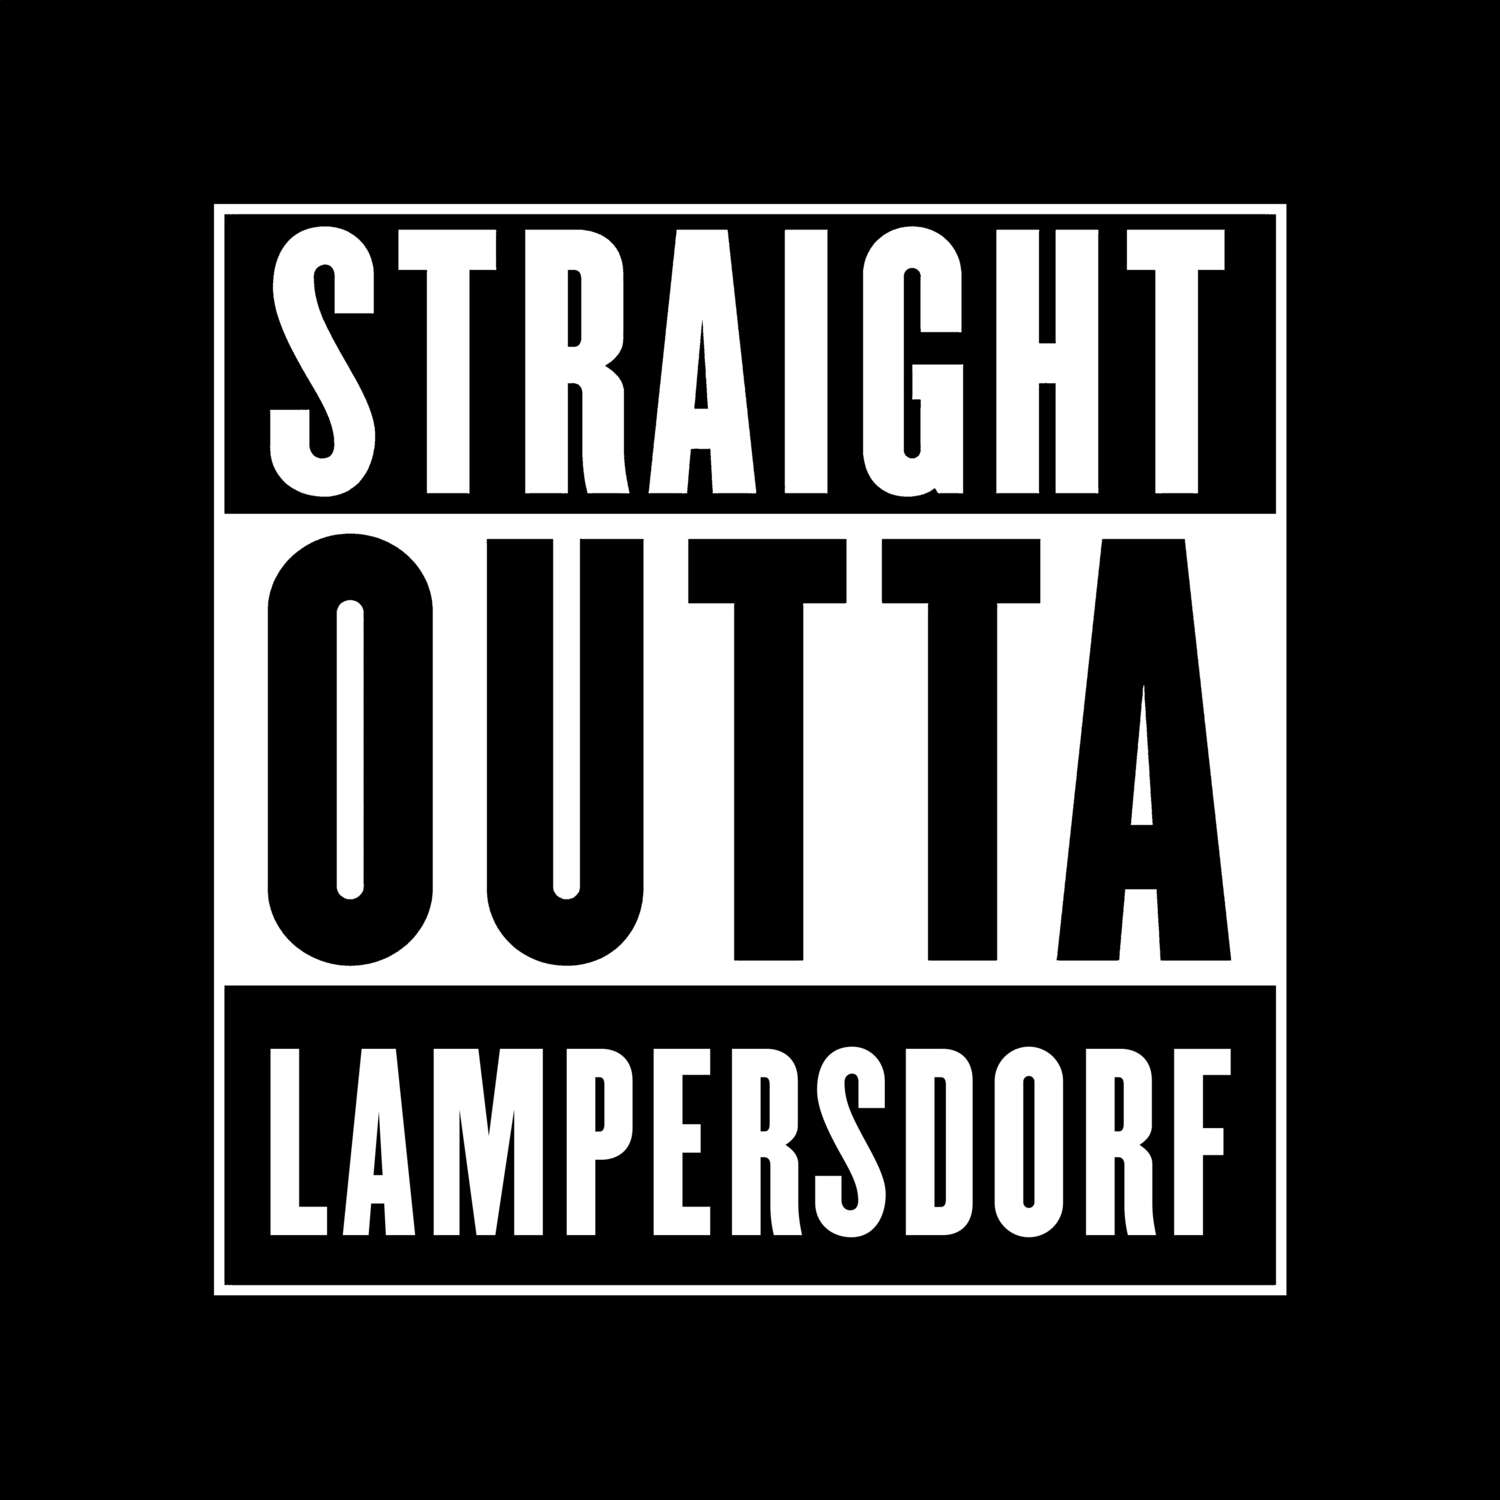 Lampersdorf T-Shirt »Straight Outta«